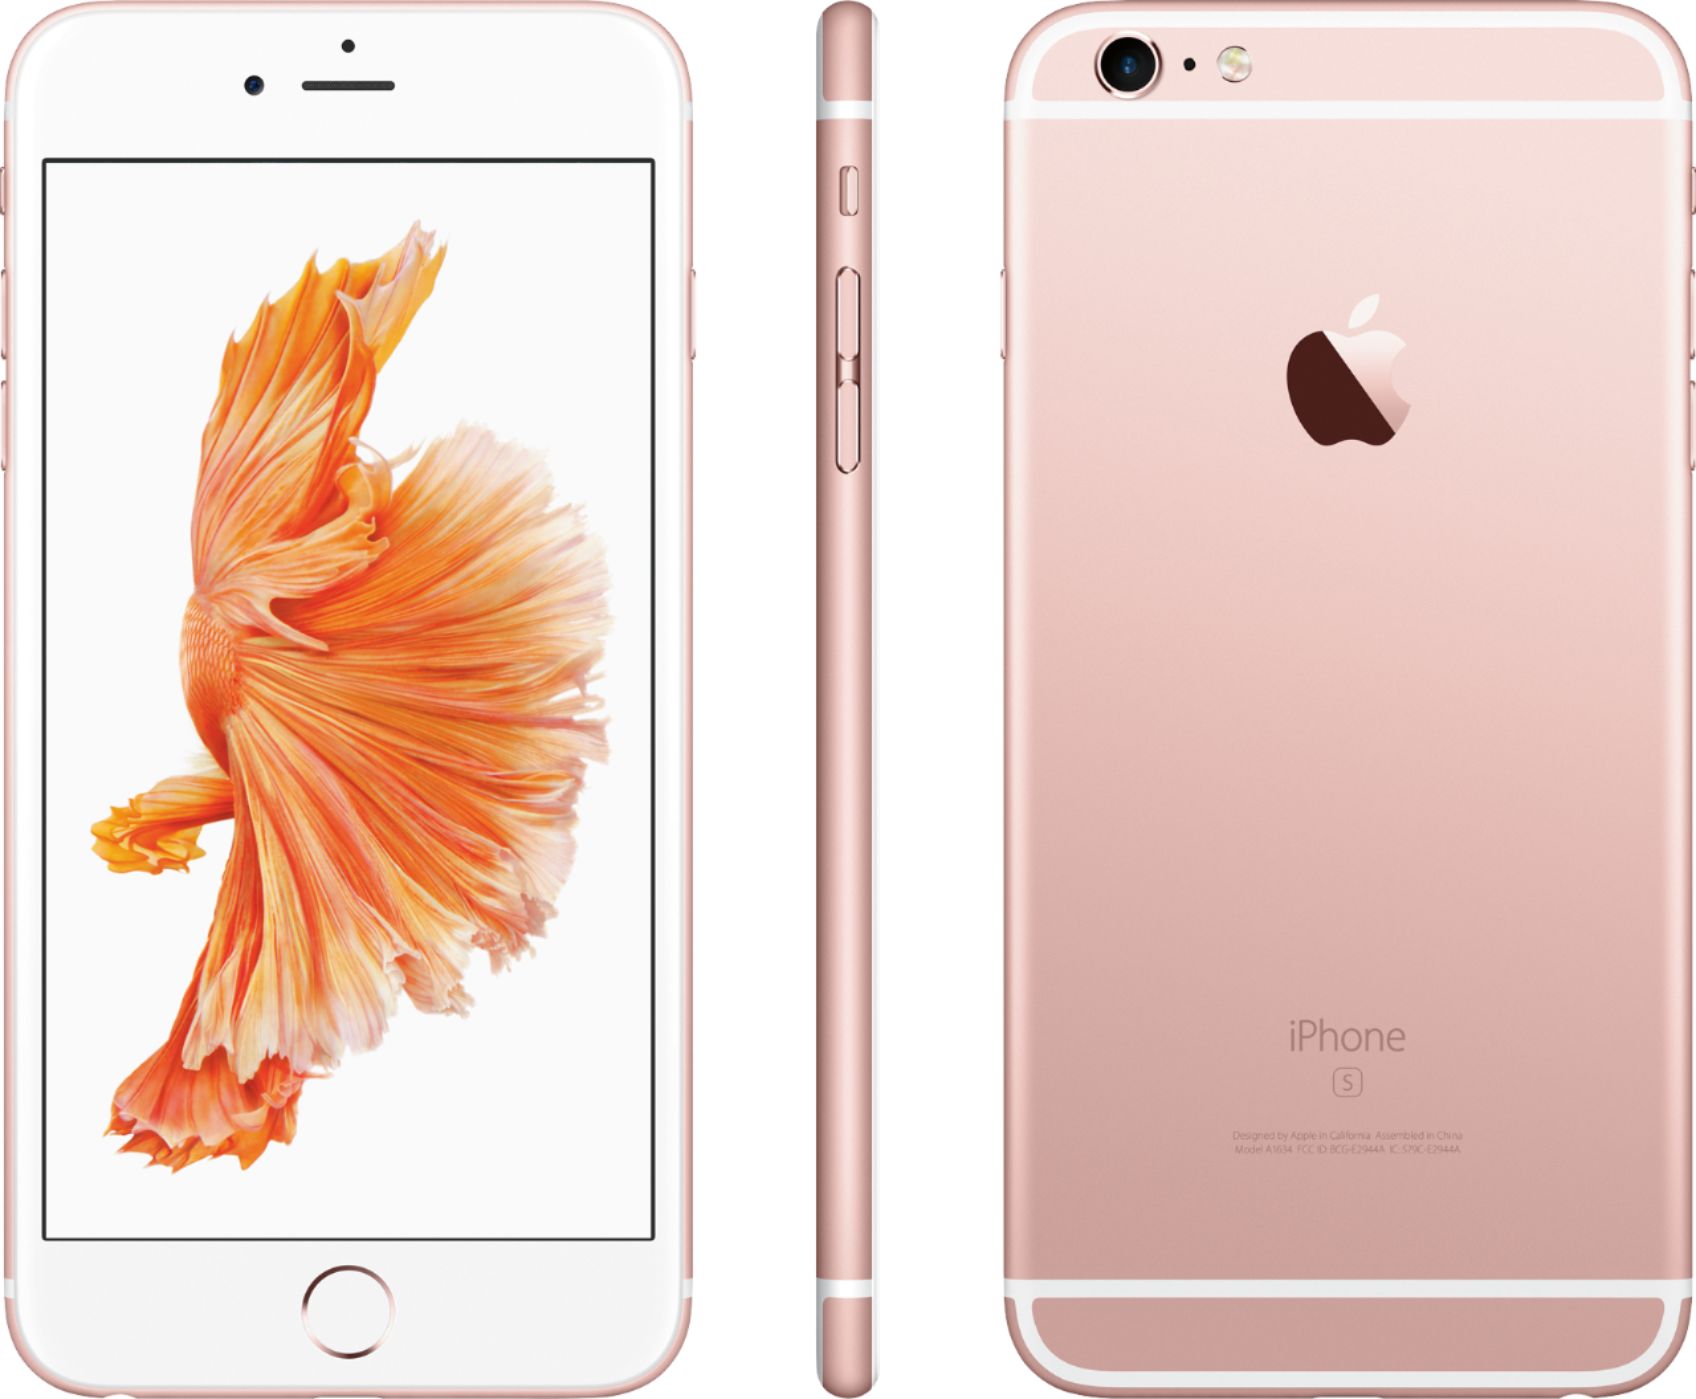 Kers Symptomen Rechthoek Best Buy: Apple iPhone 6s Plus 32GB Rose Gold (AT&T) MN372LL/A